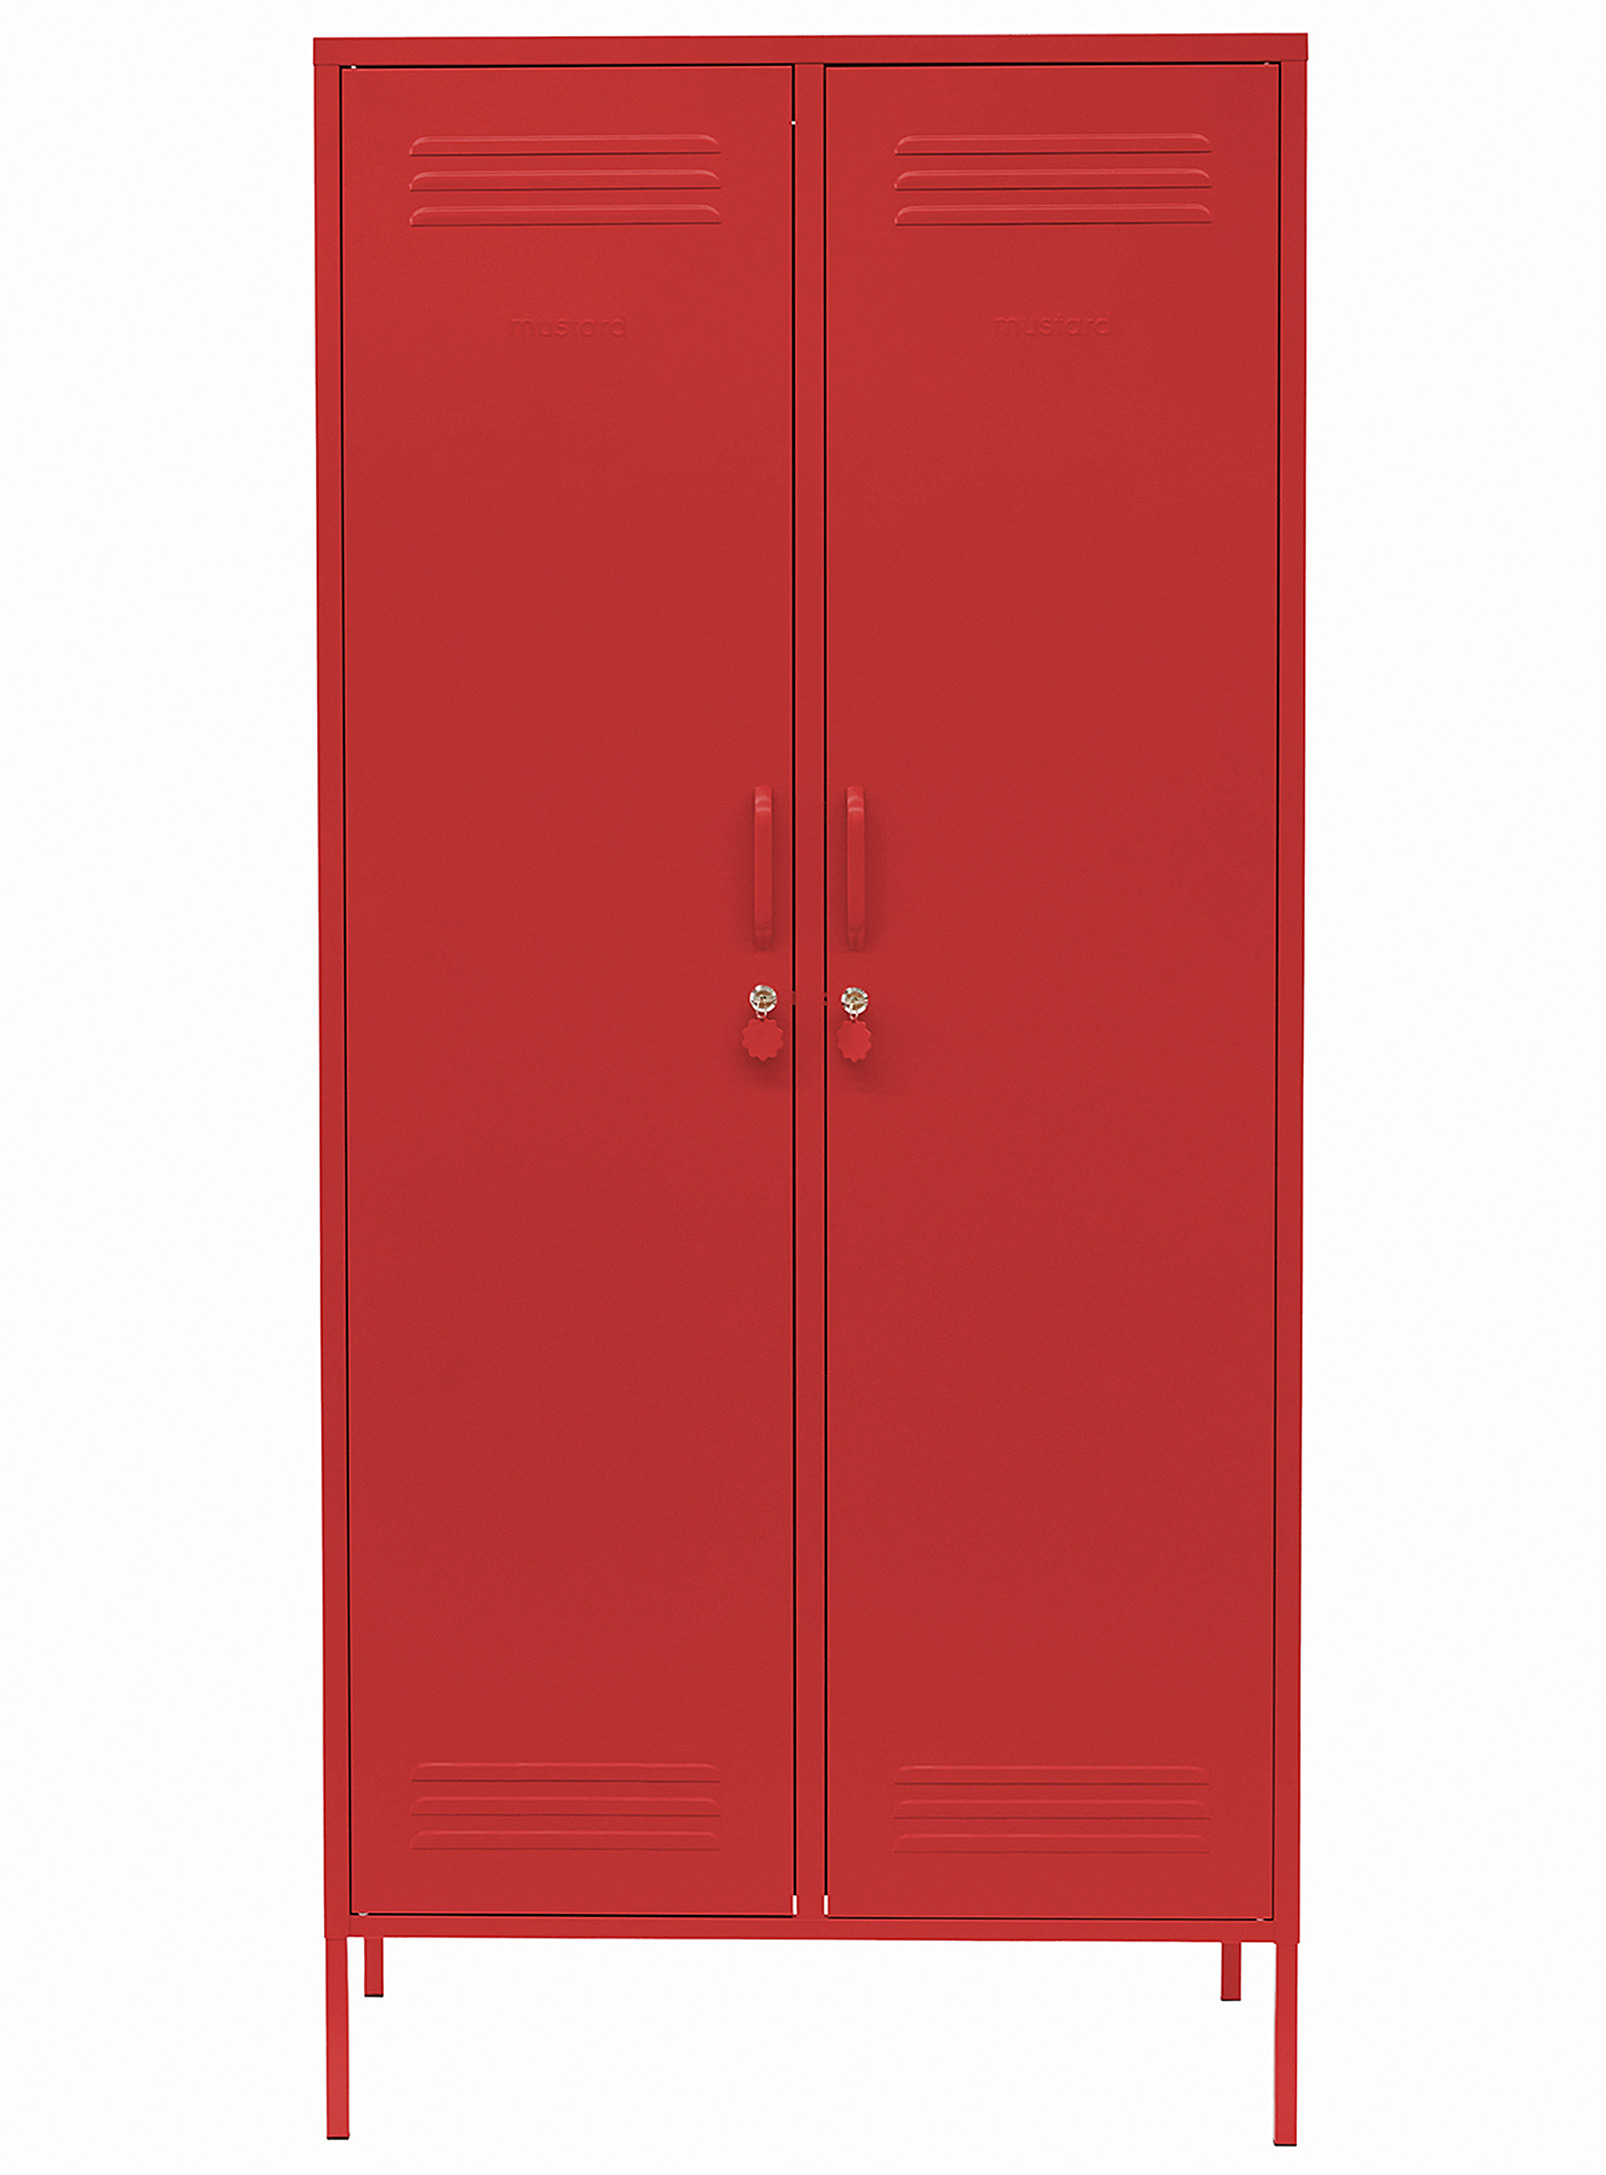 Mustard The Twinny Metallic Storage Cabinet In Red